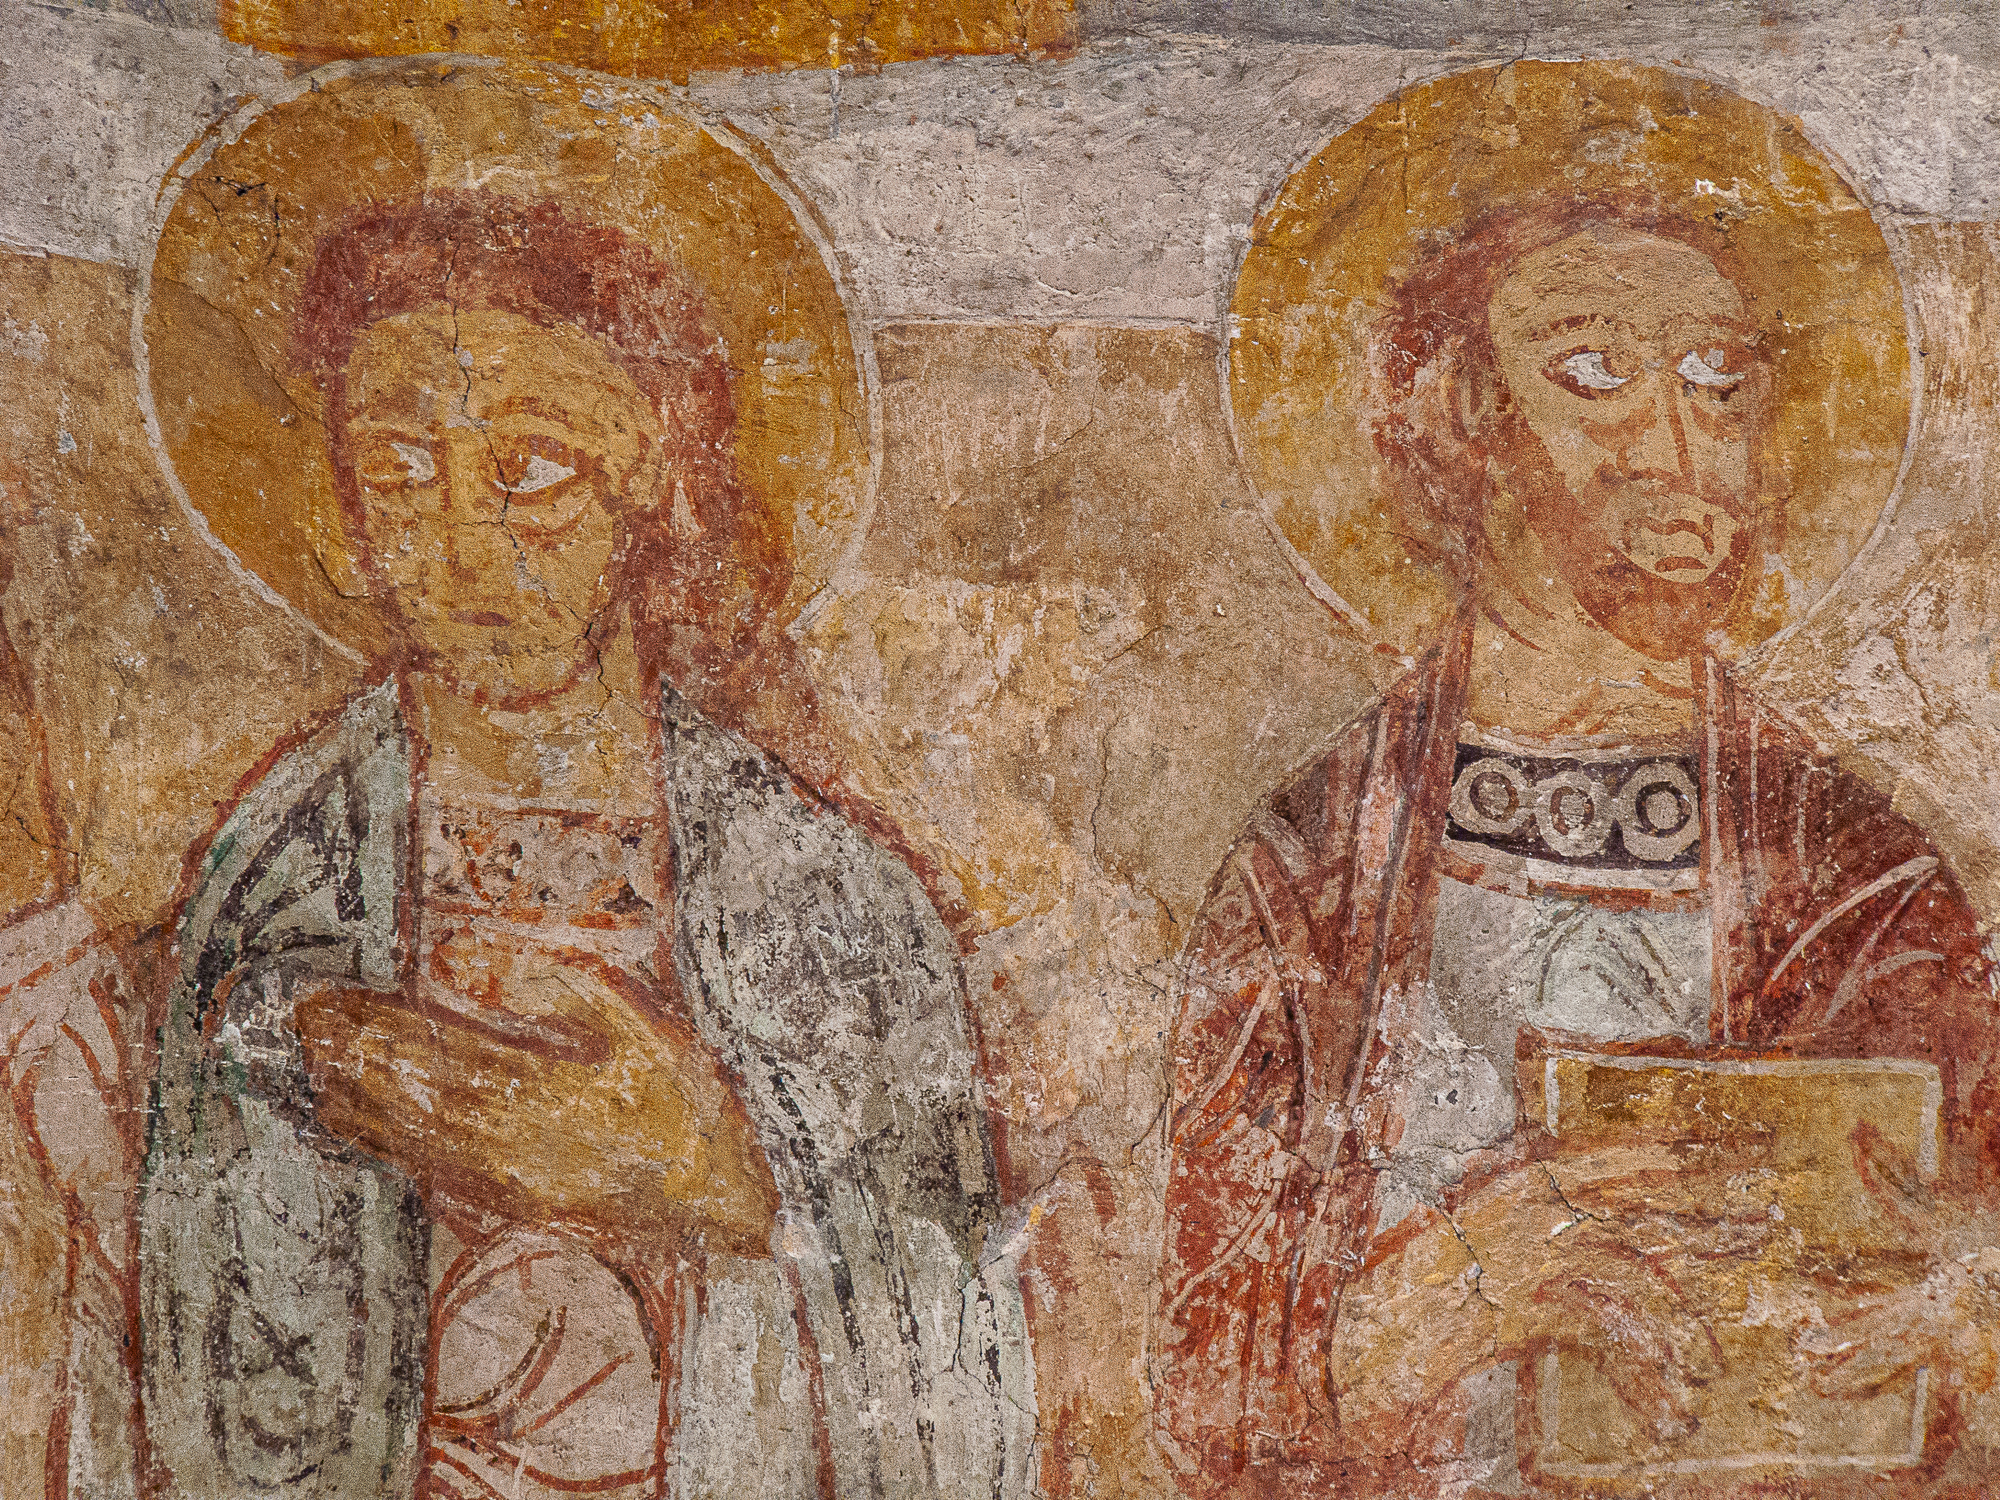 An ancient depiction of saints Paul and John